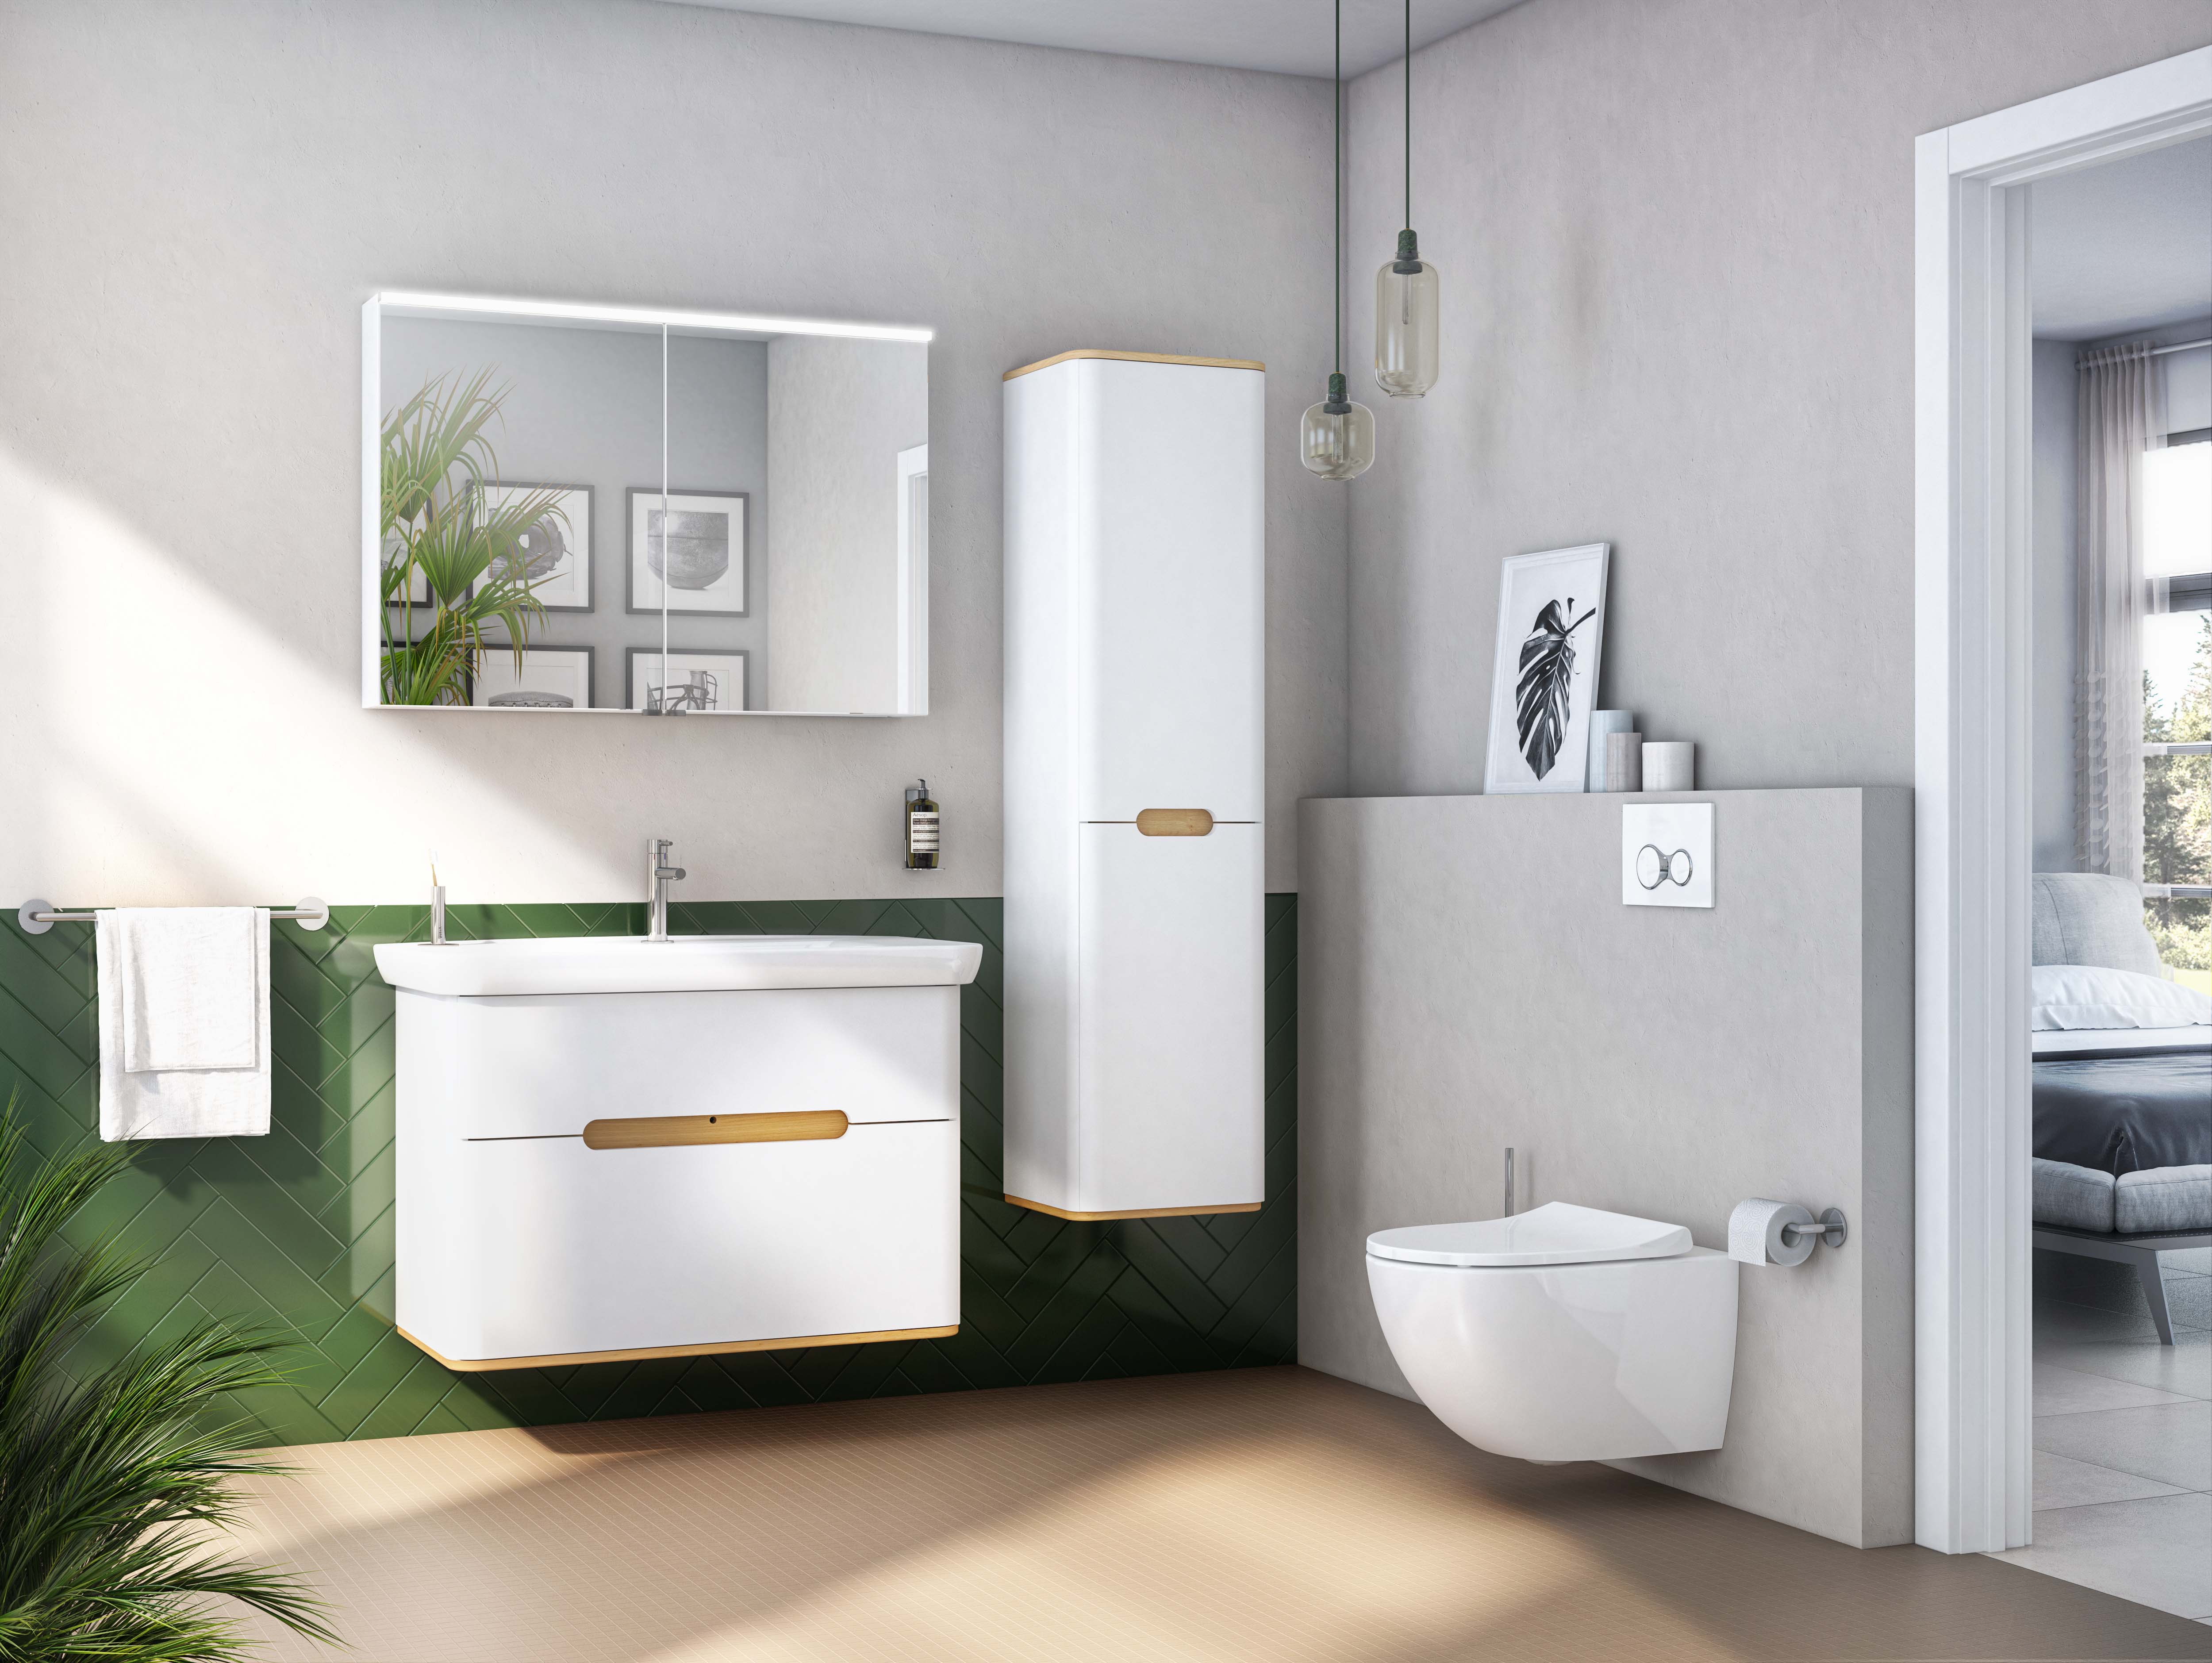 image of a scandi style bathroom - vitra sento furniture in white